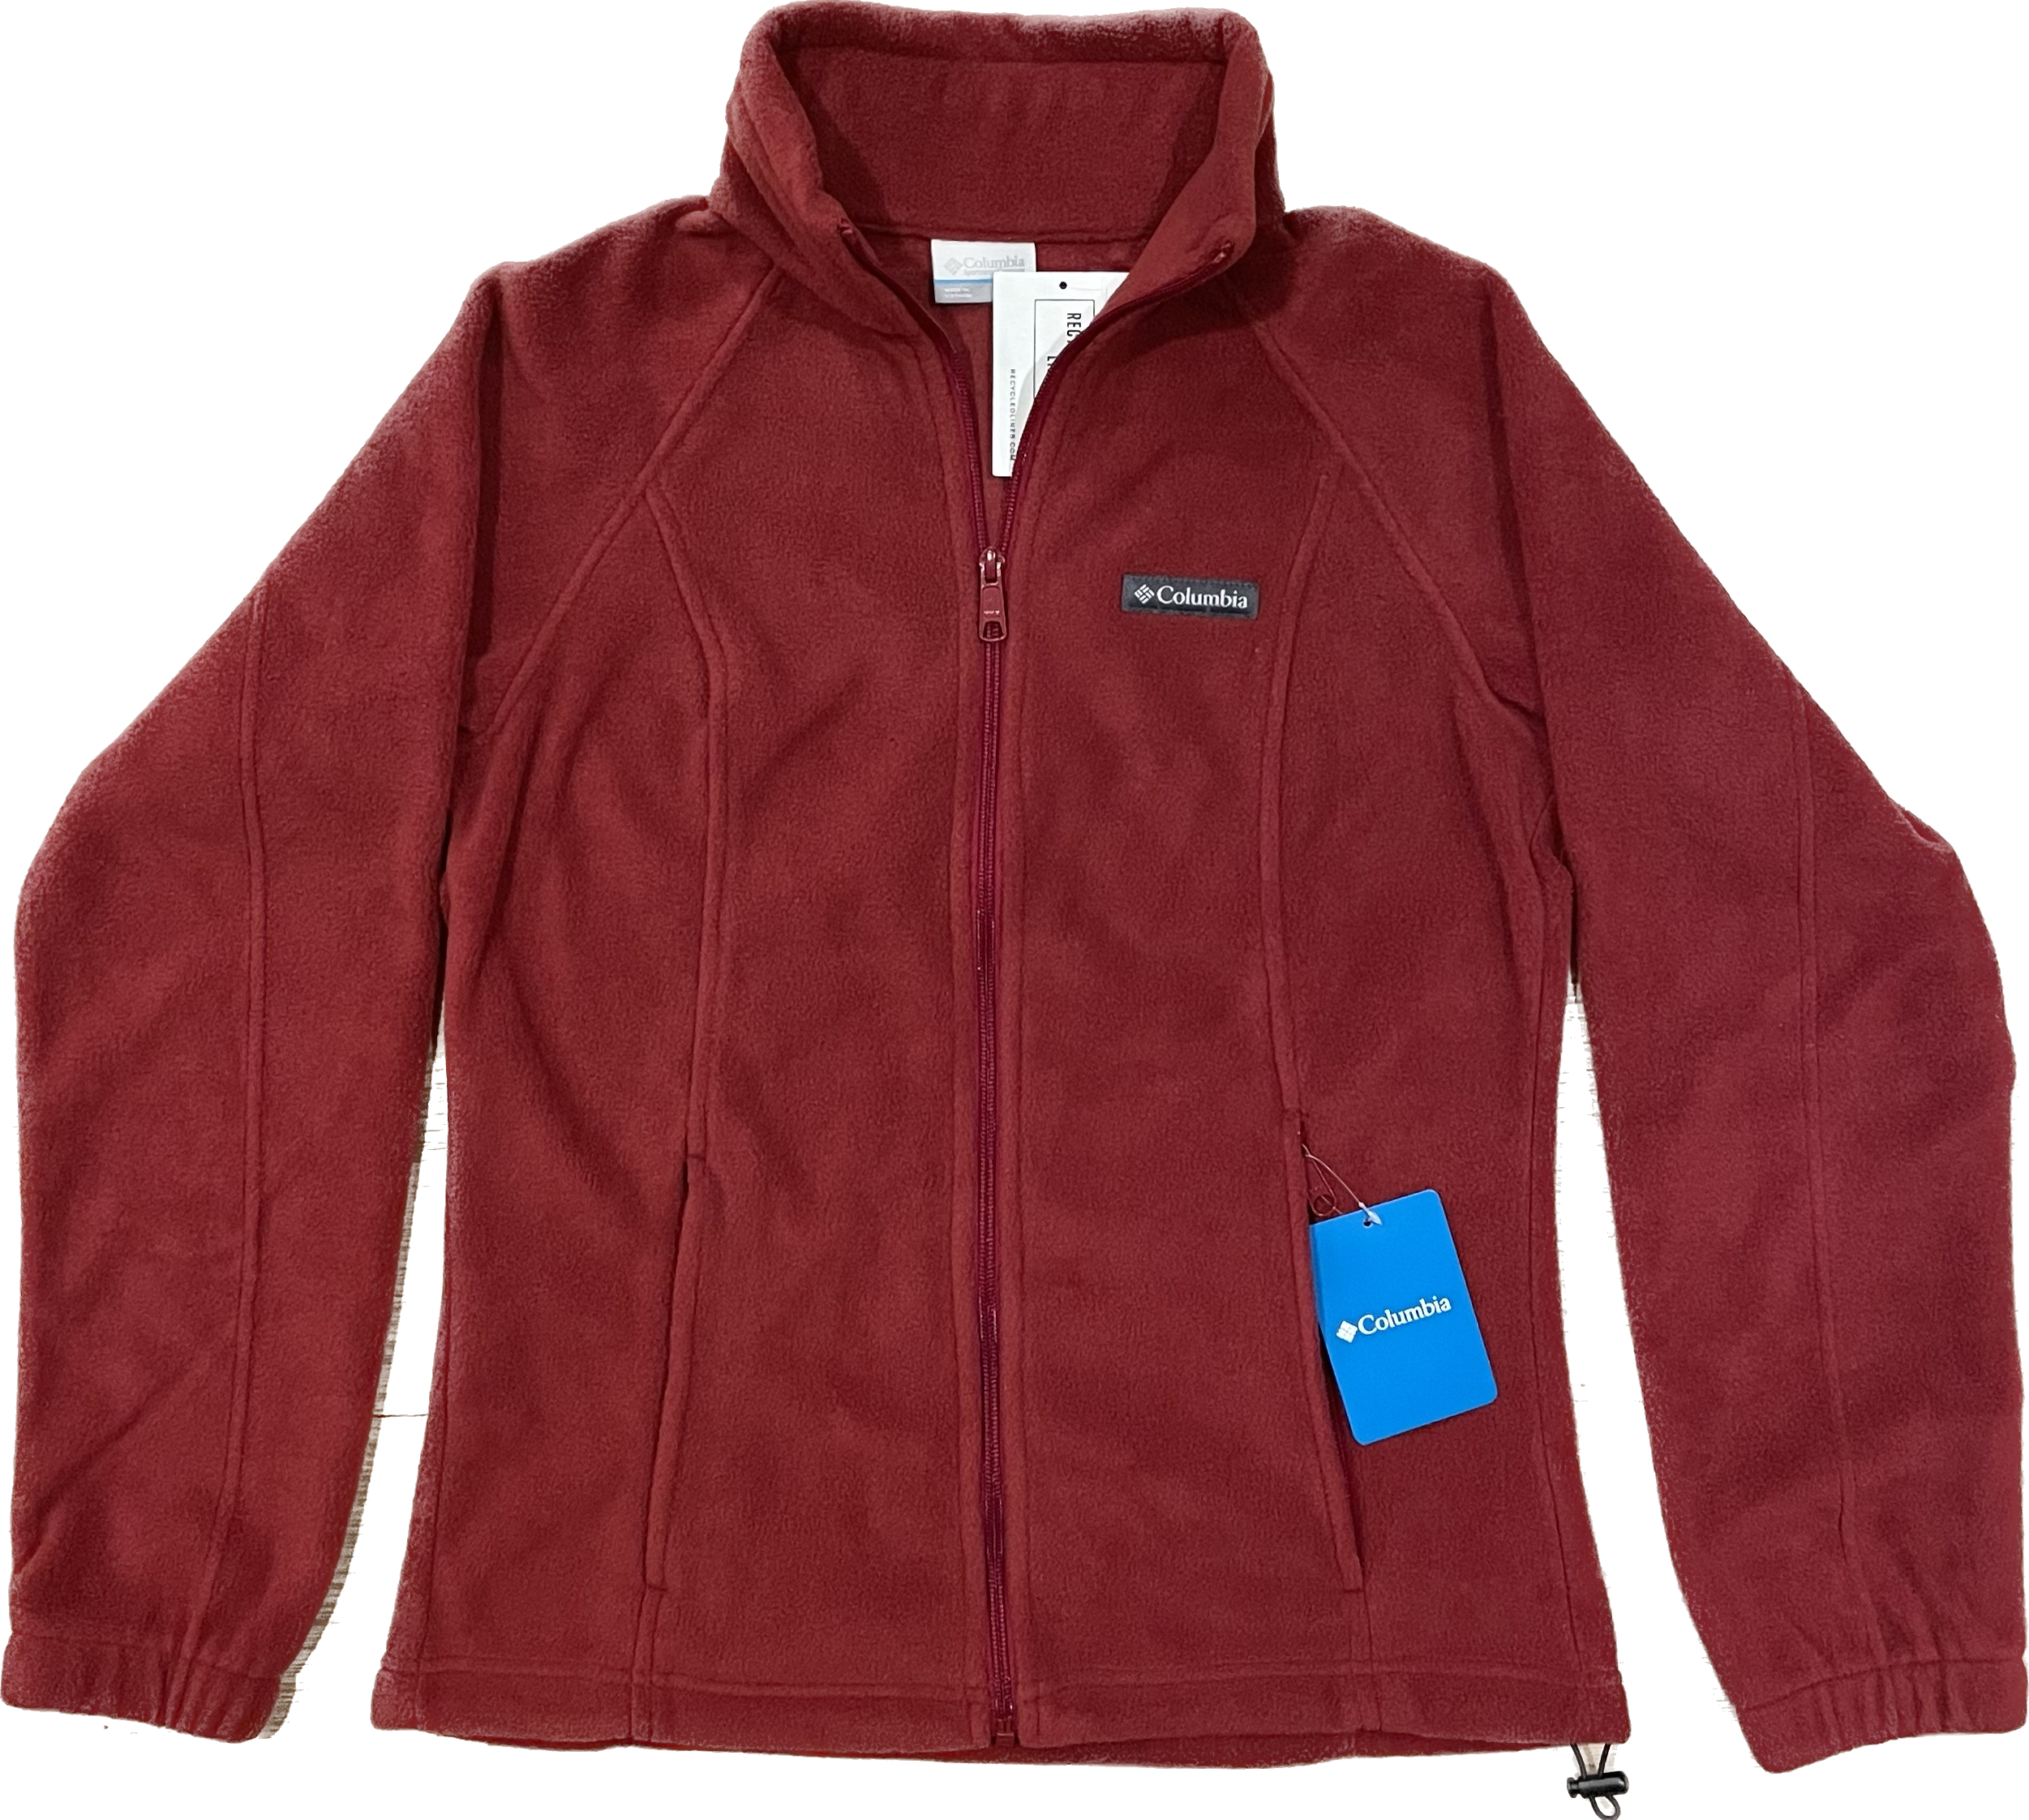 Columbia NWT Fleece Jacket, Red Women's Sizes S